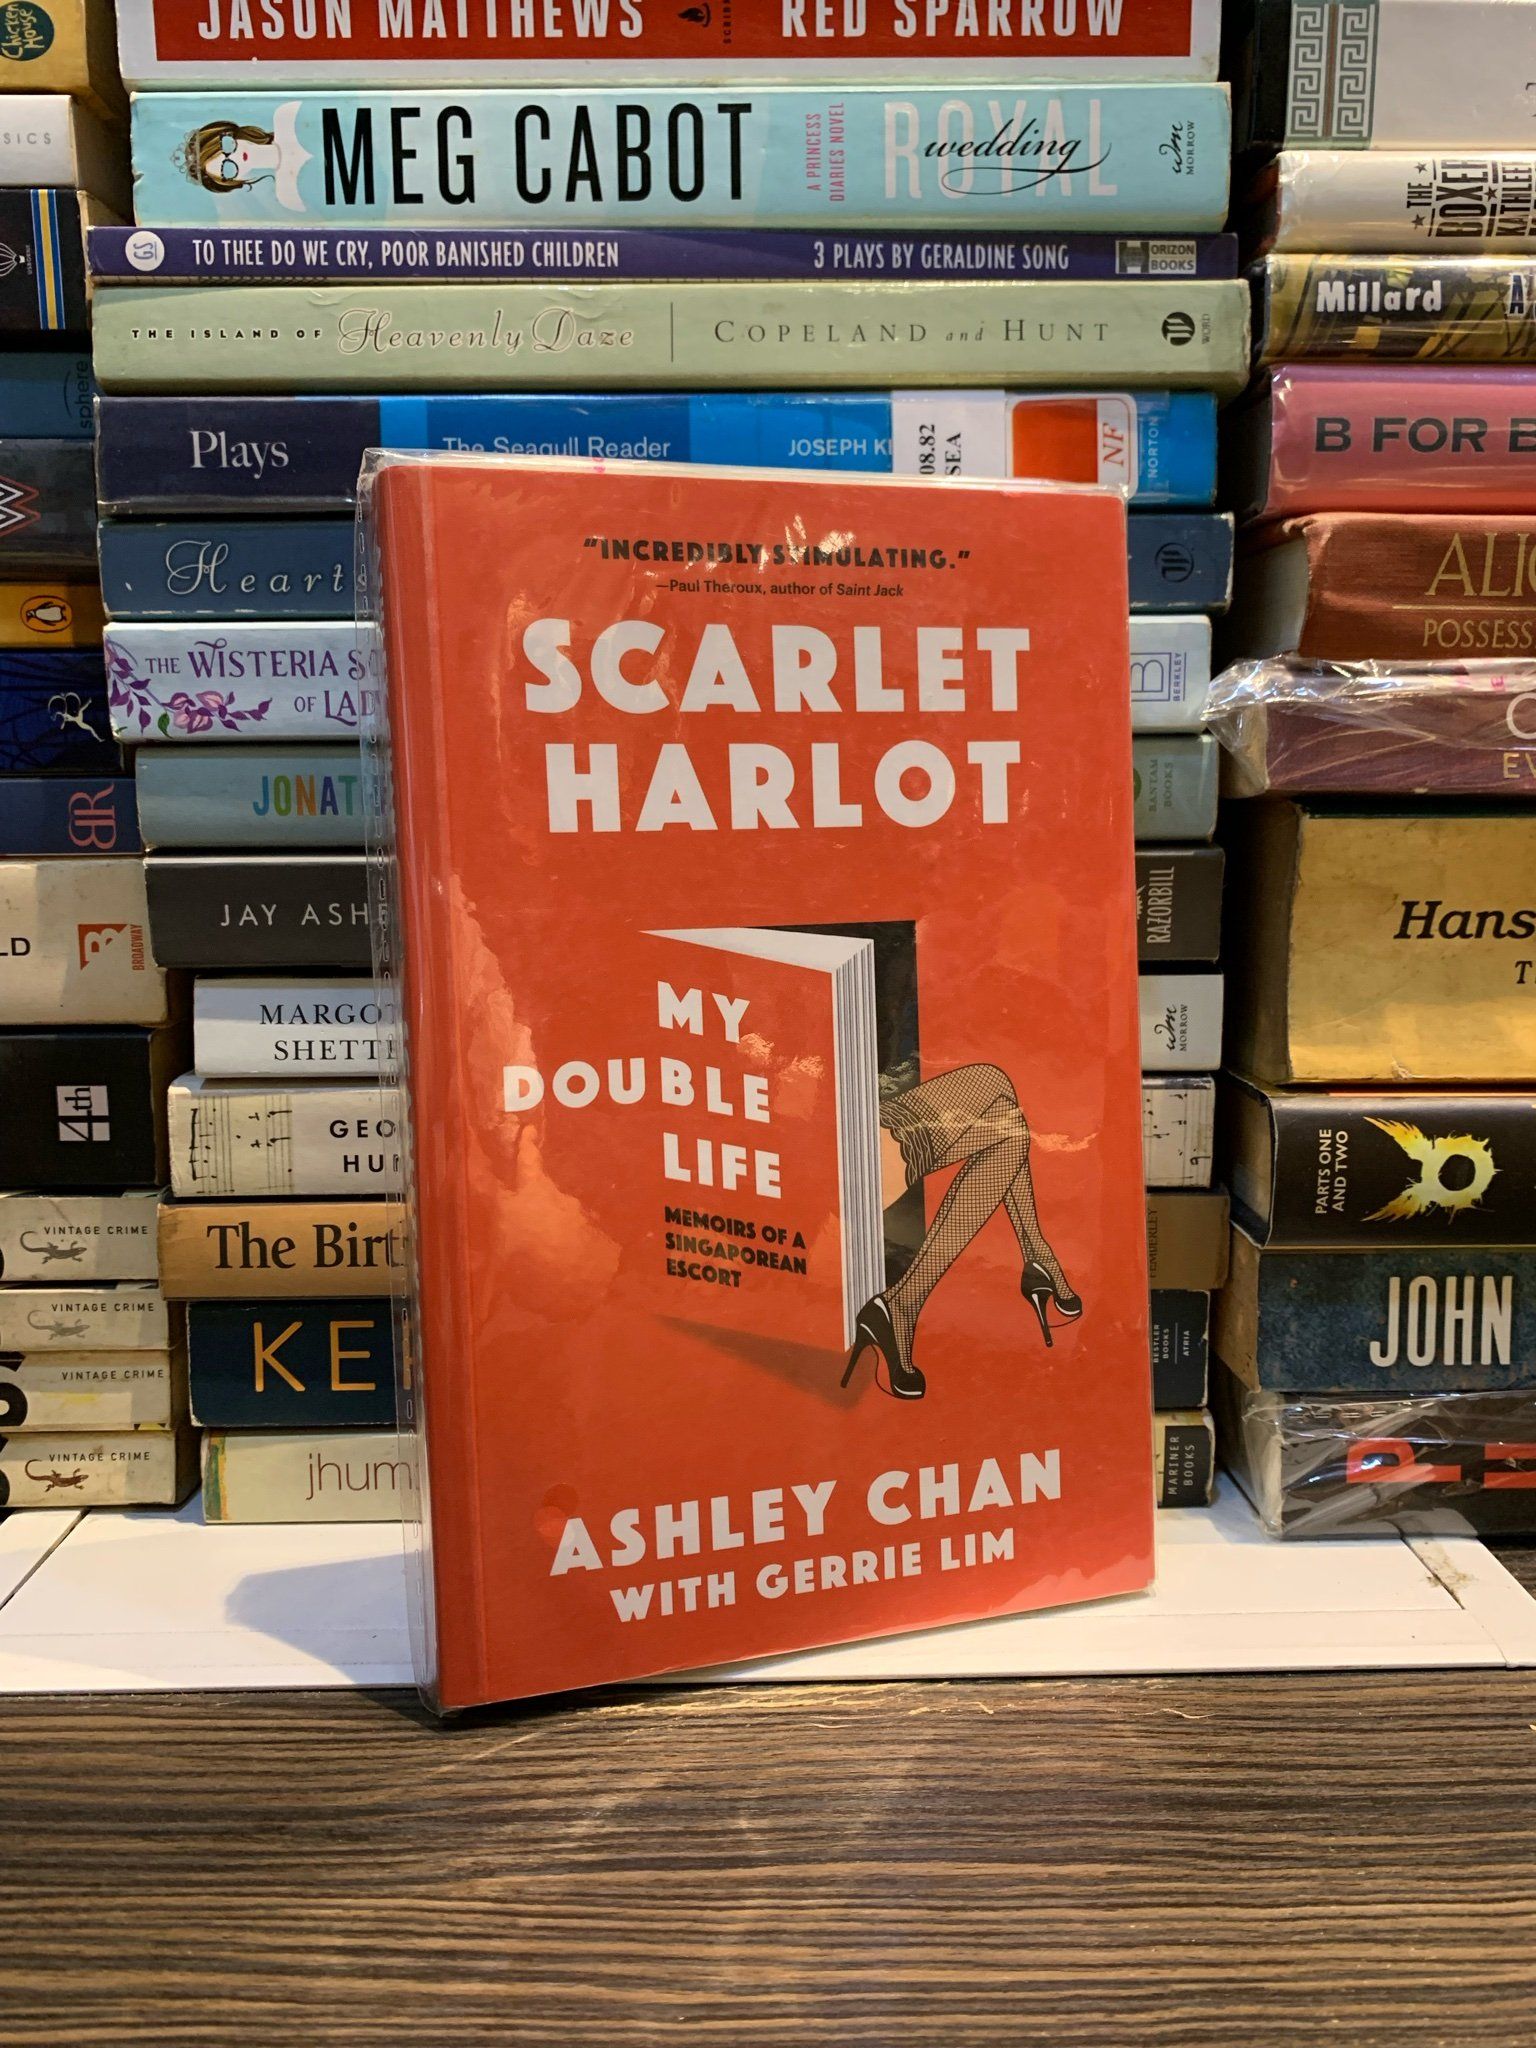  Scarlet Harlot: My Double Life: Memoirs of a Singaporean Escort - Ashley Chan ,  Gerrie Lim 